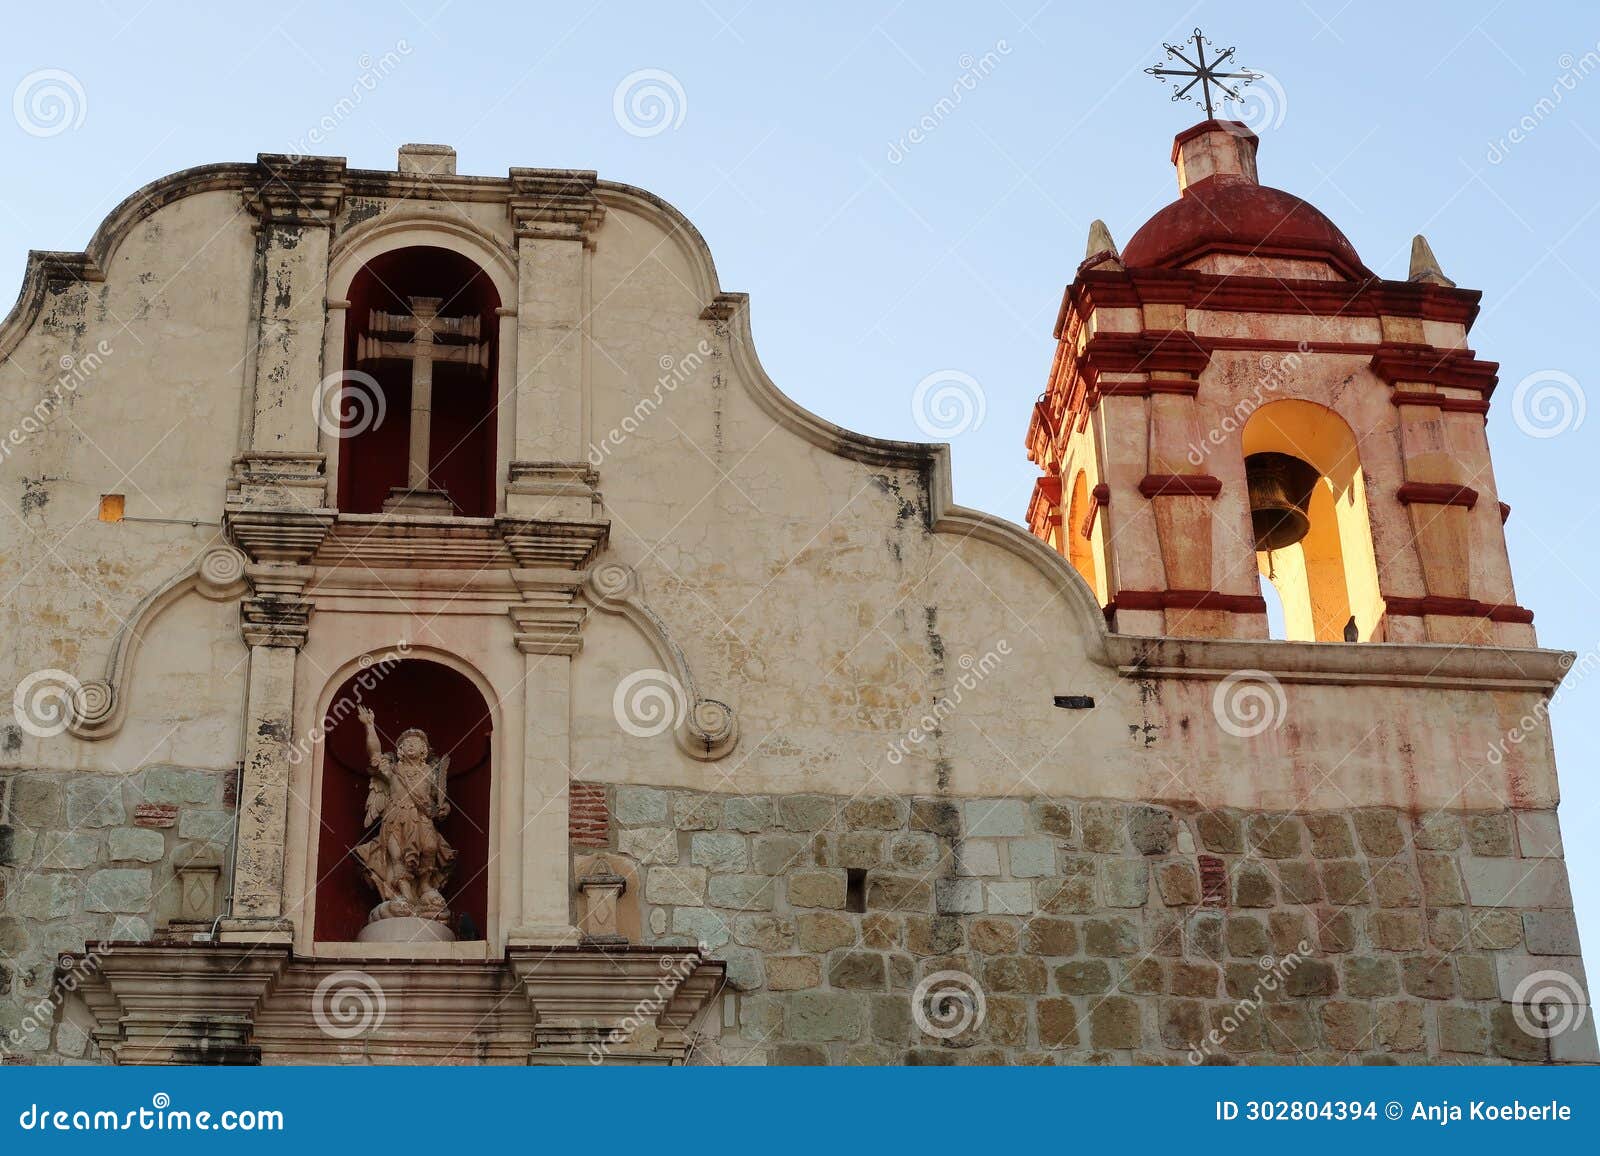 facade of the church iglesia preciosa sangre de cristo with its beautiful bell tower and ornaments, oaxaca, mexico